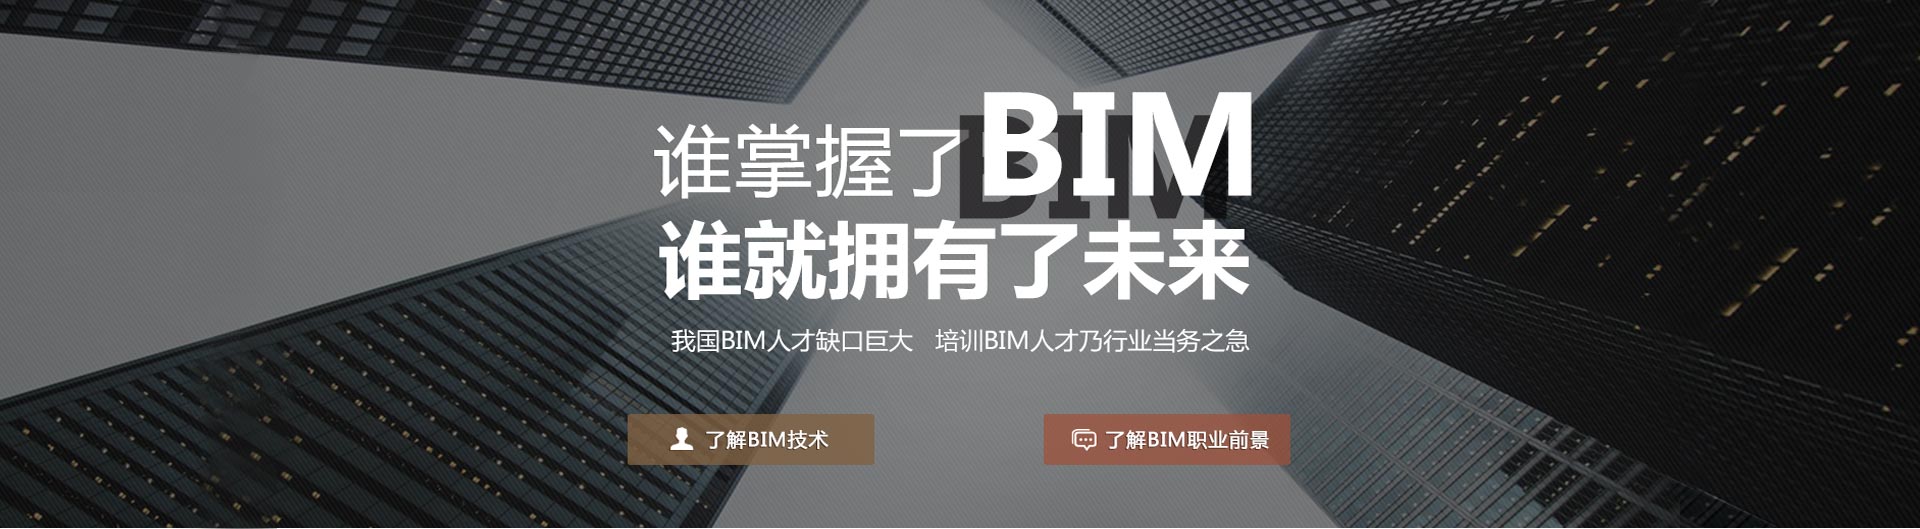 bim-banner01-1.jpg